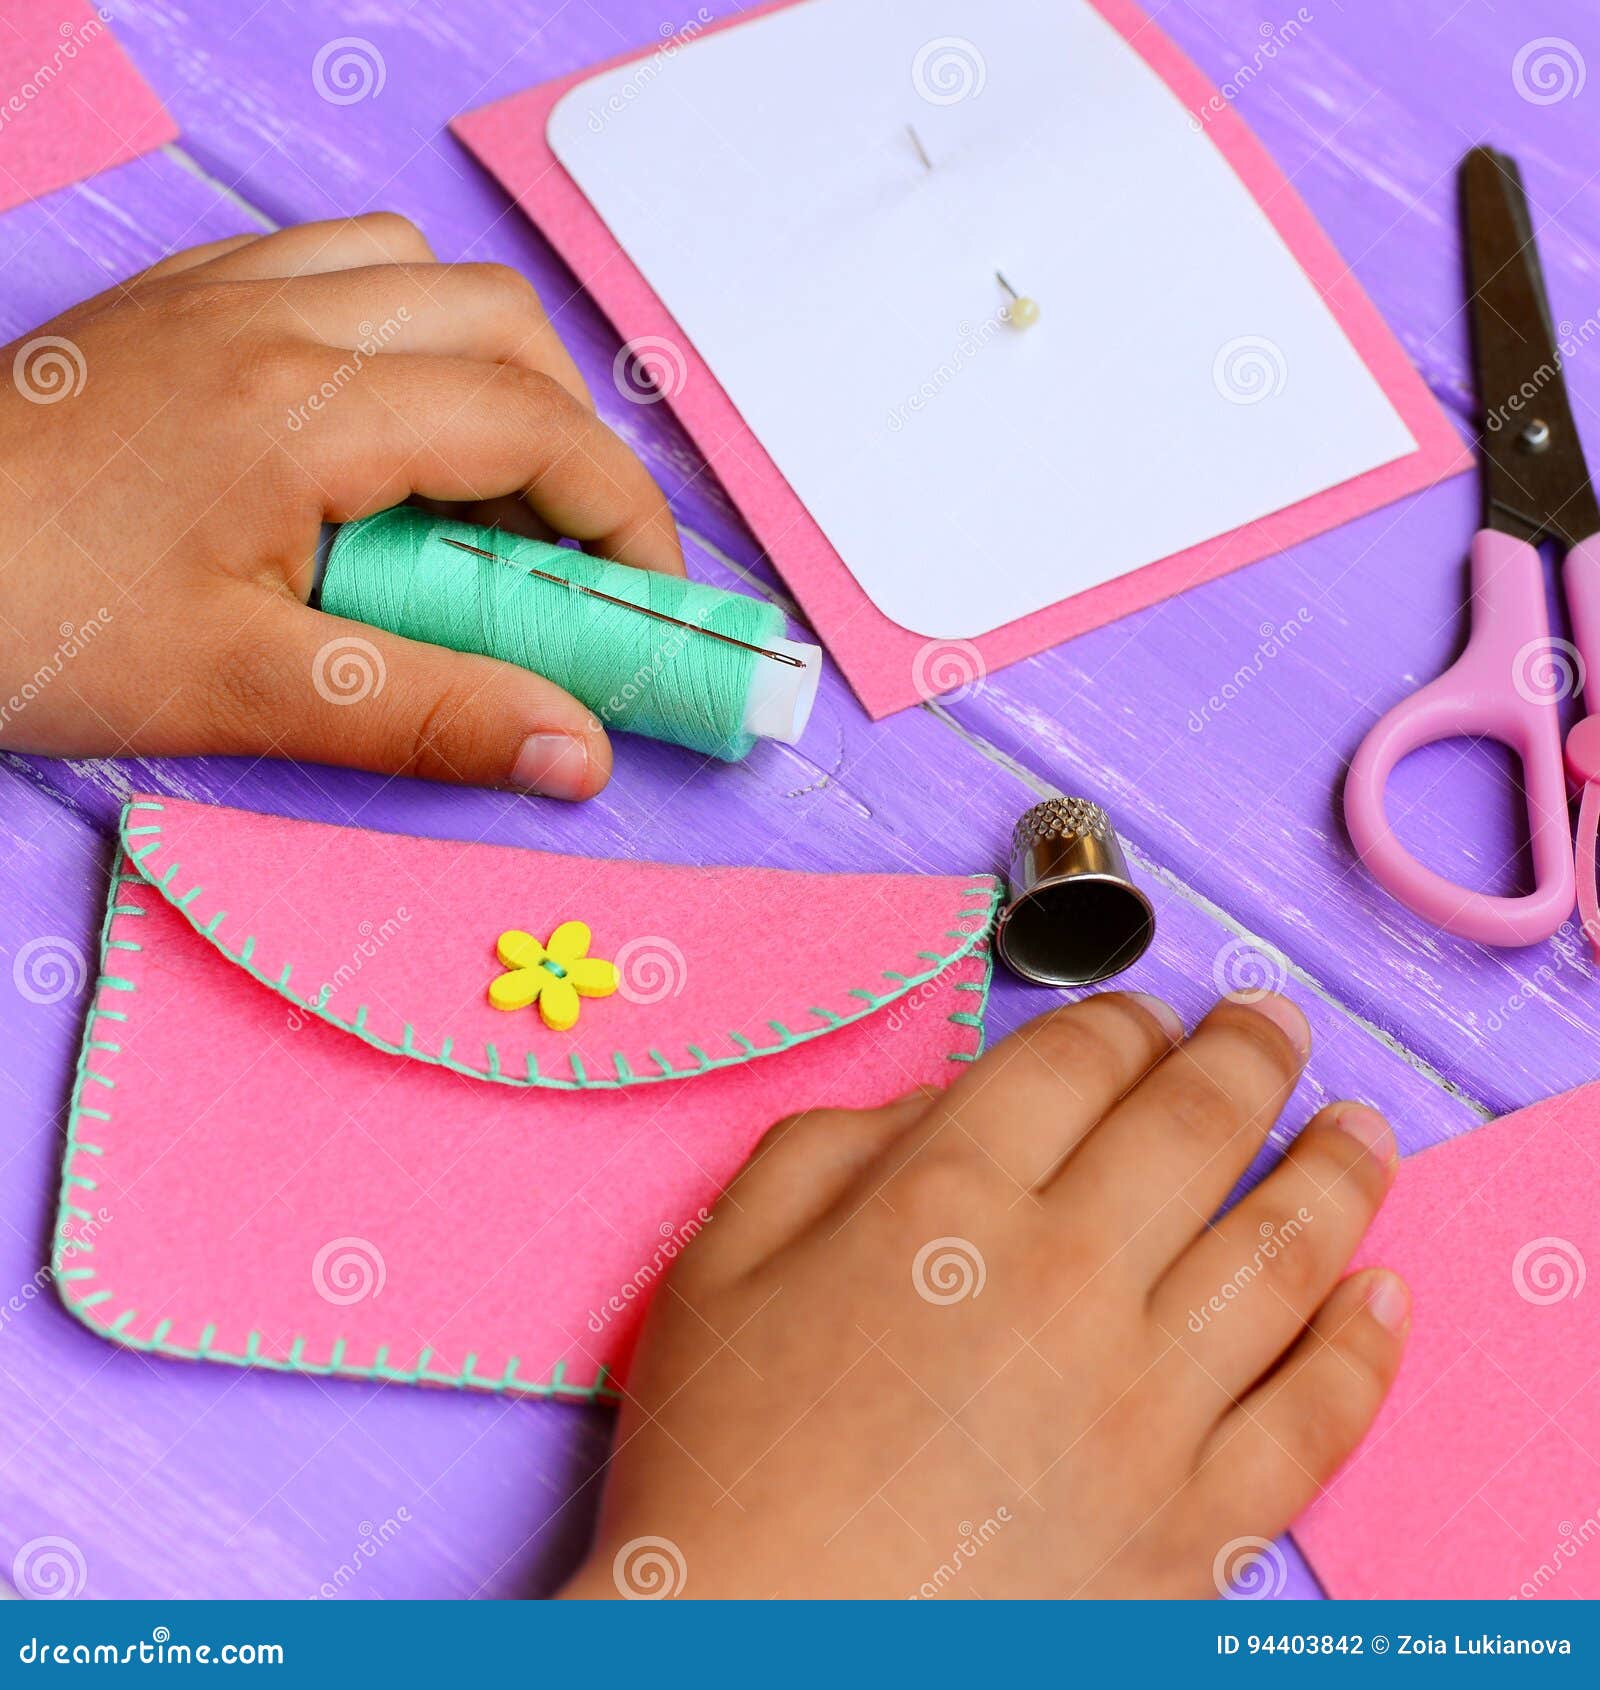 Exceart 6 Set Sewing Kit for Kids DIY Handbags Art Craft Hand Stitch Play Felt Set for Beginner Children Girls Boy Great Gifts